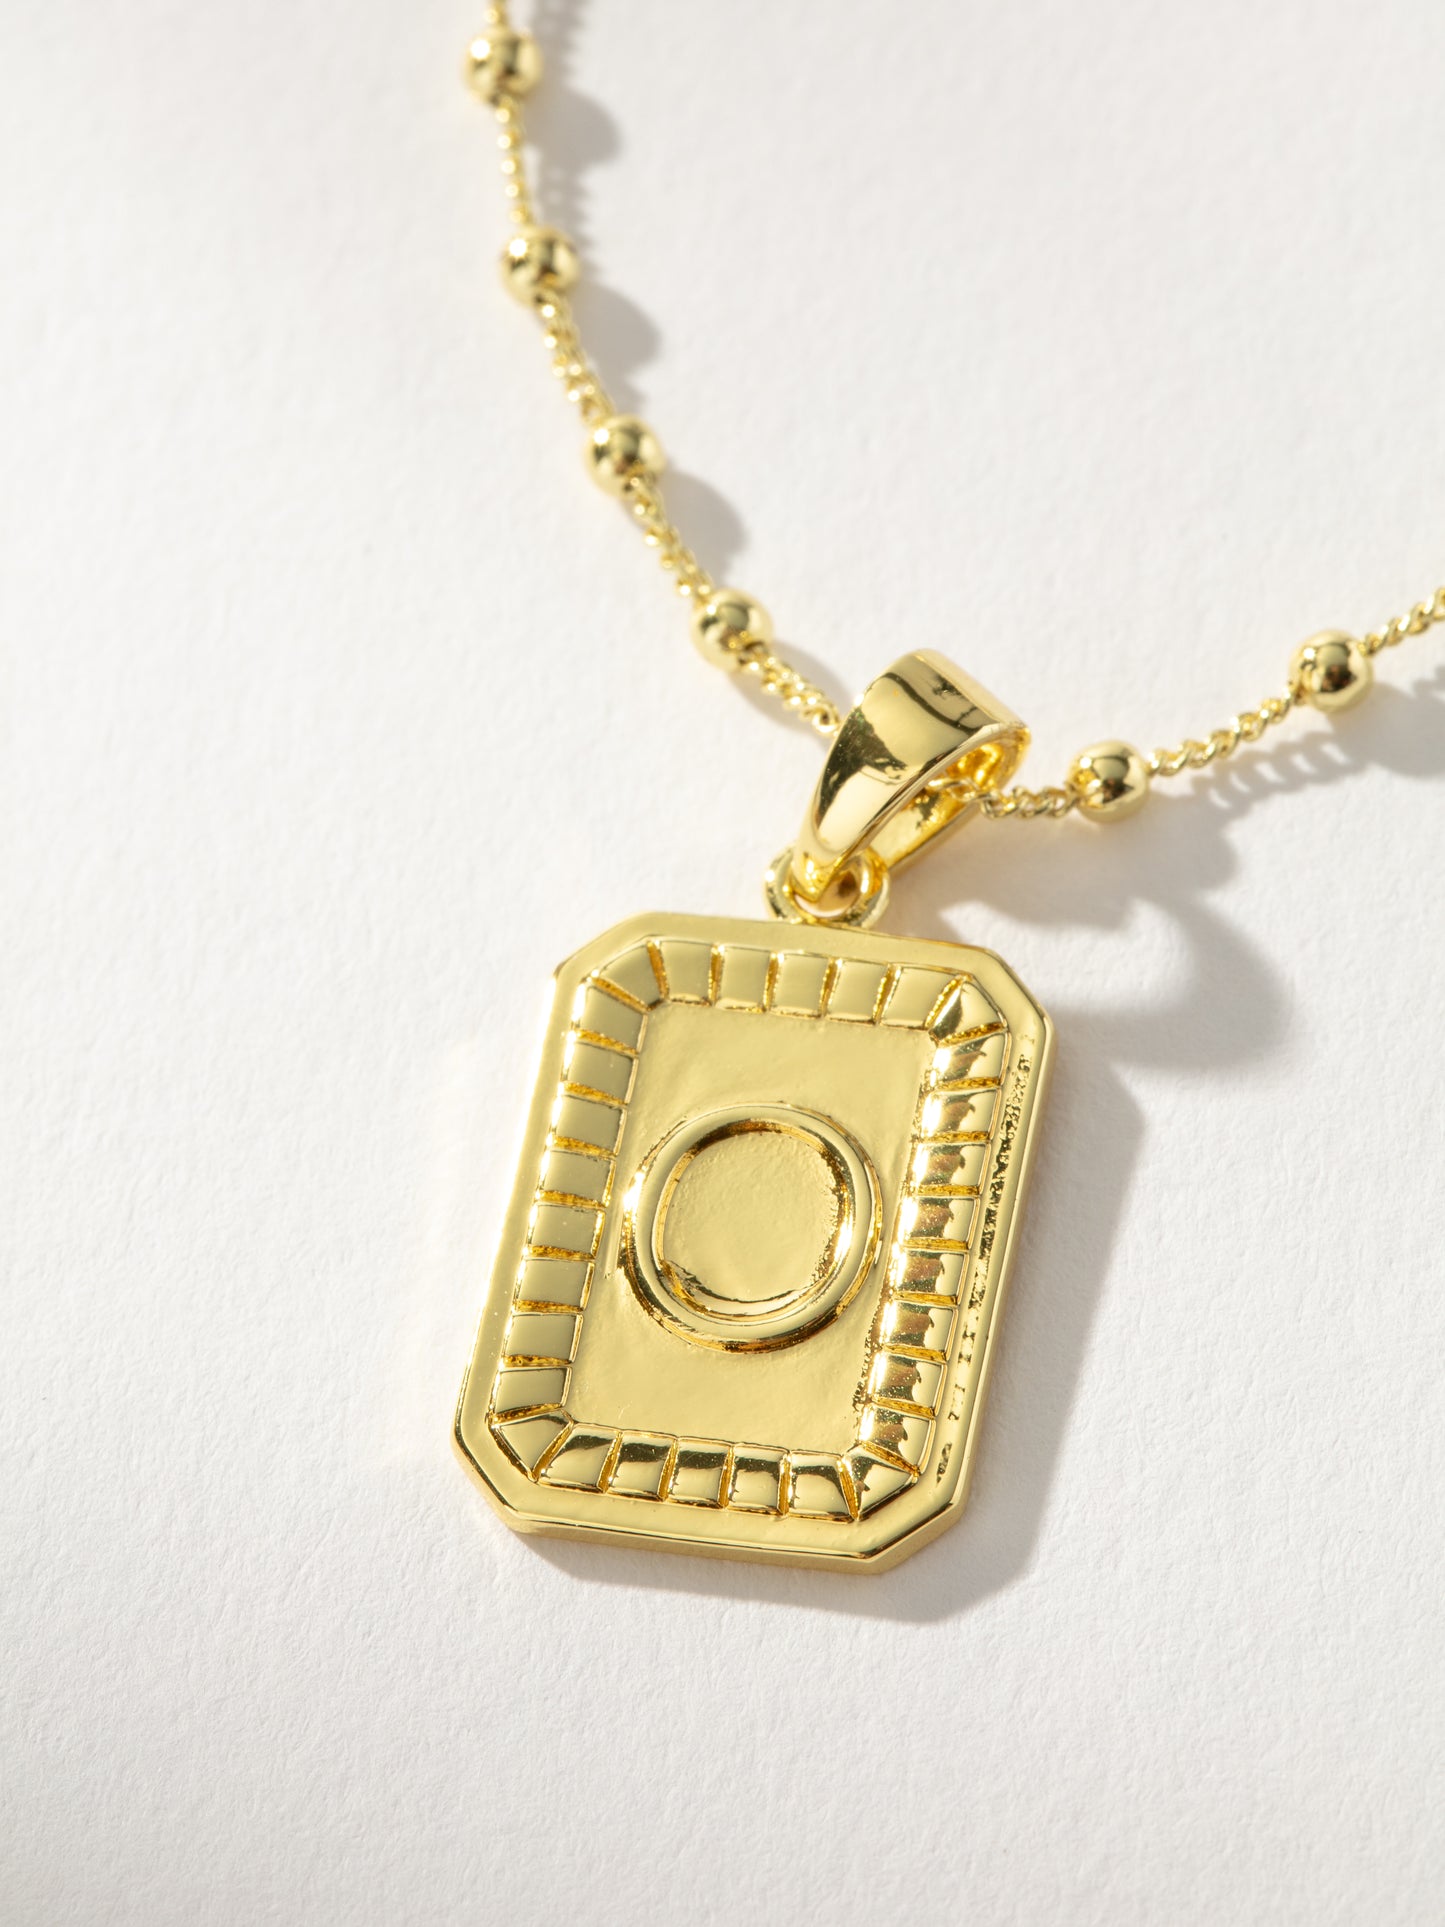 Sur Necklace | Gold O | Product Image | Uncommon James